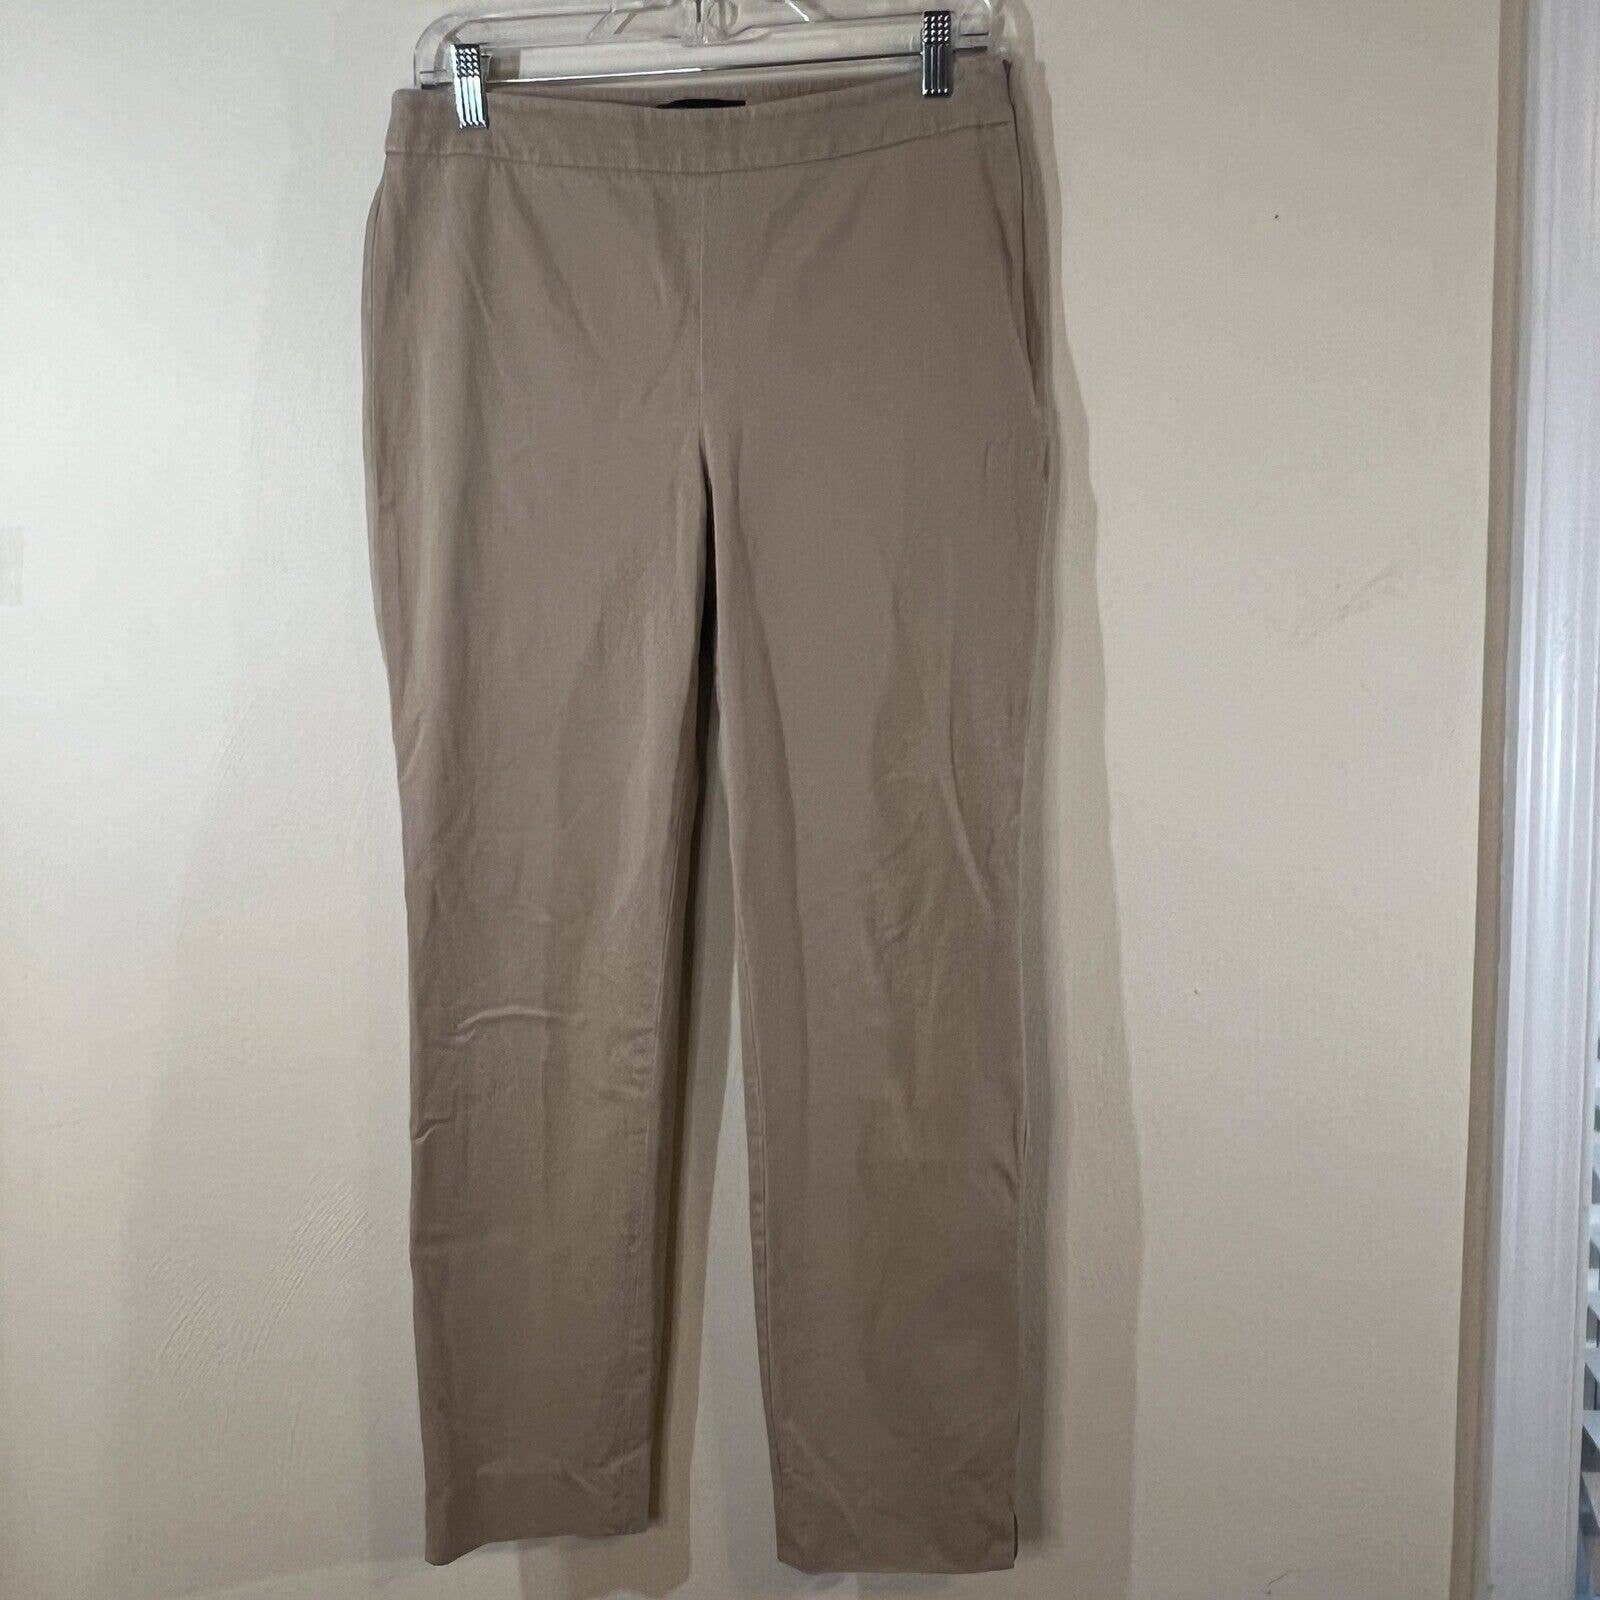 Wholesale price Talbots Womens Khaki Crop Pants Size 8 